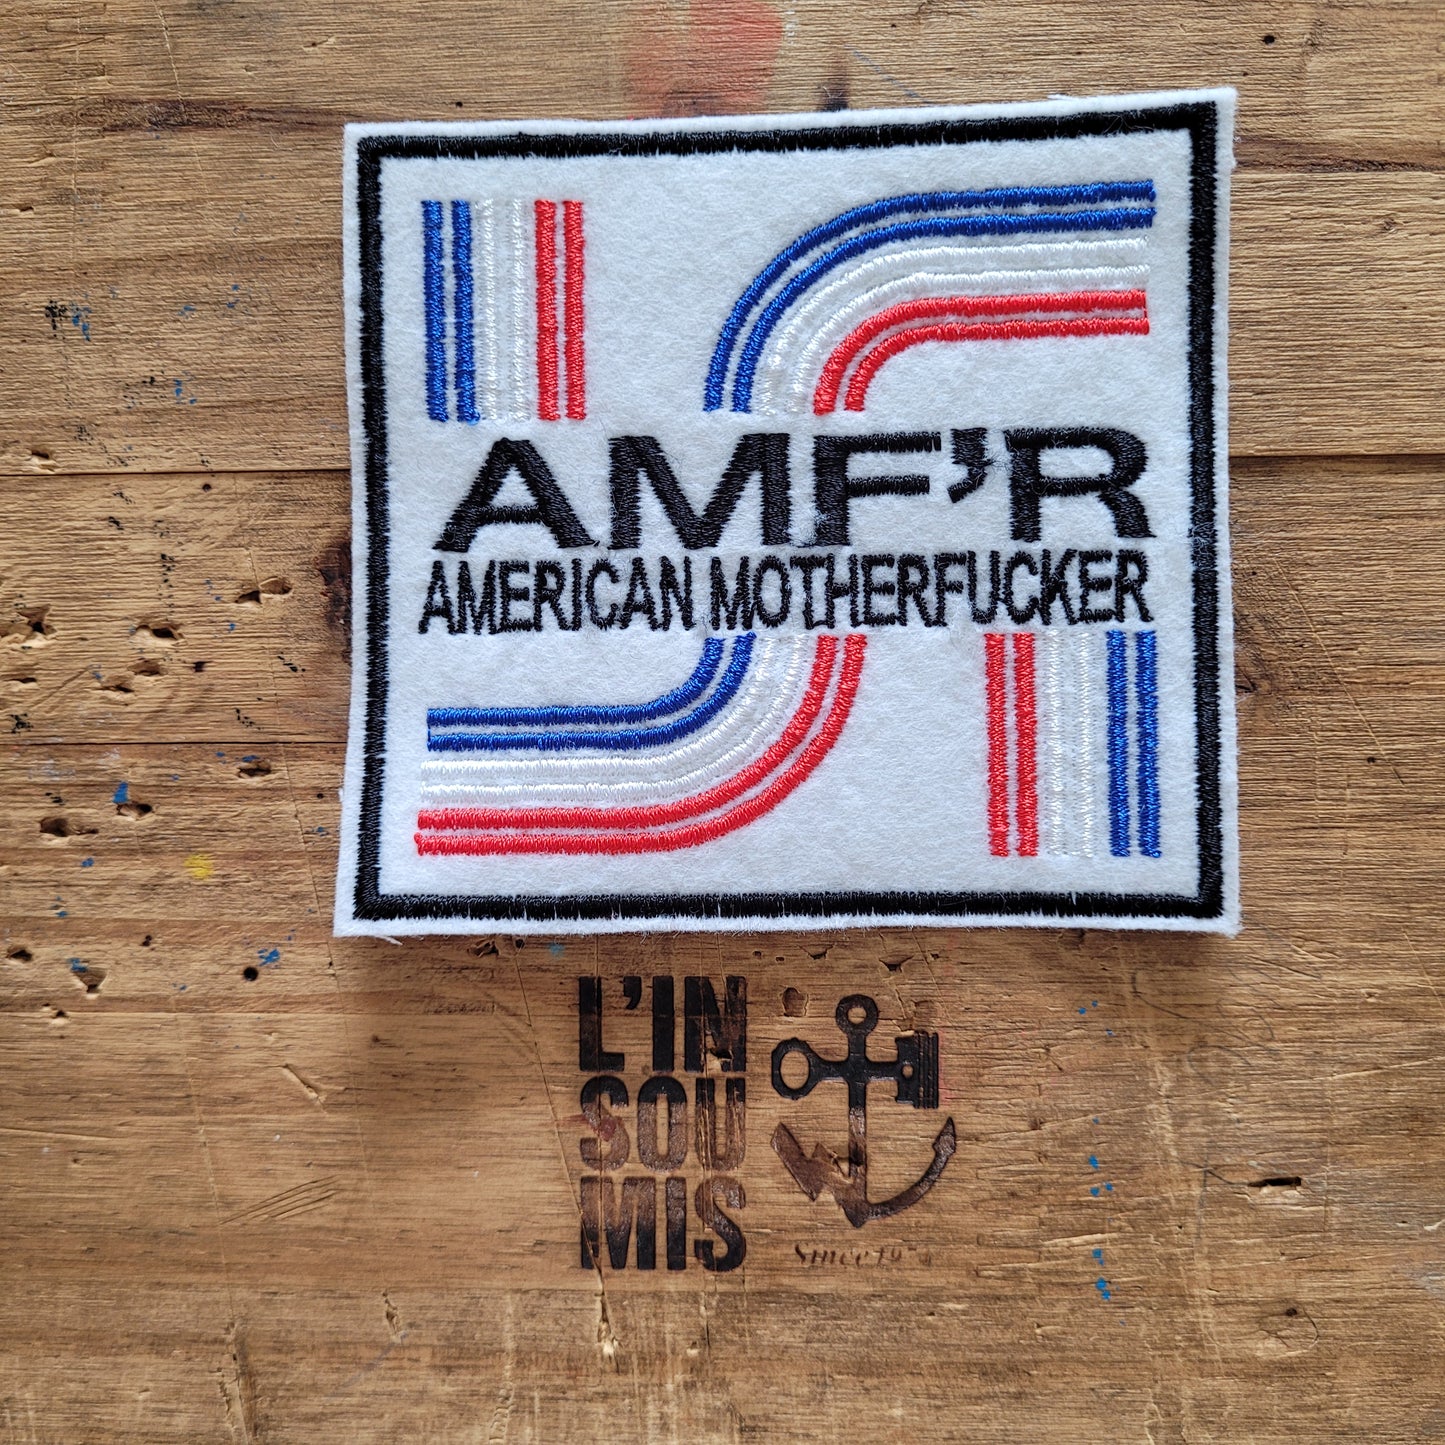 AMF'R version blanche (AMERICAN MOTHERFUCKER)